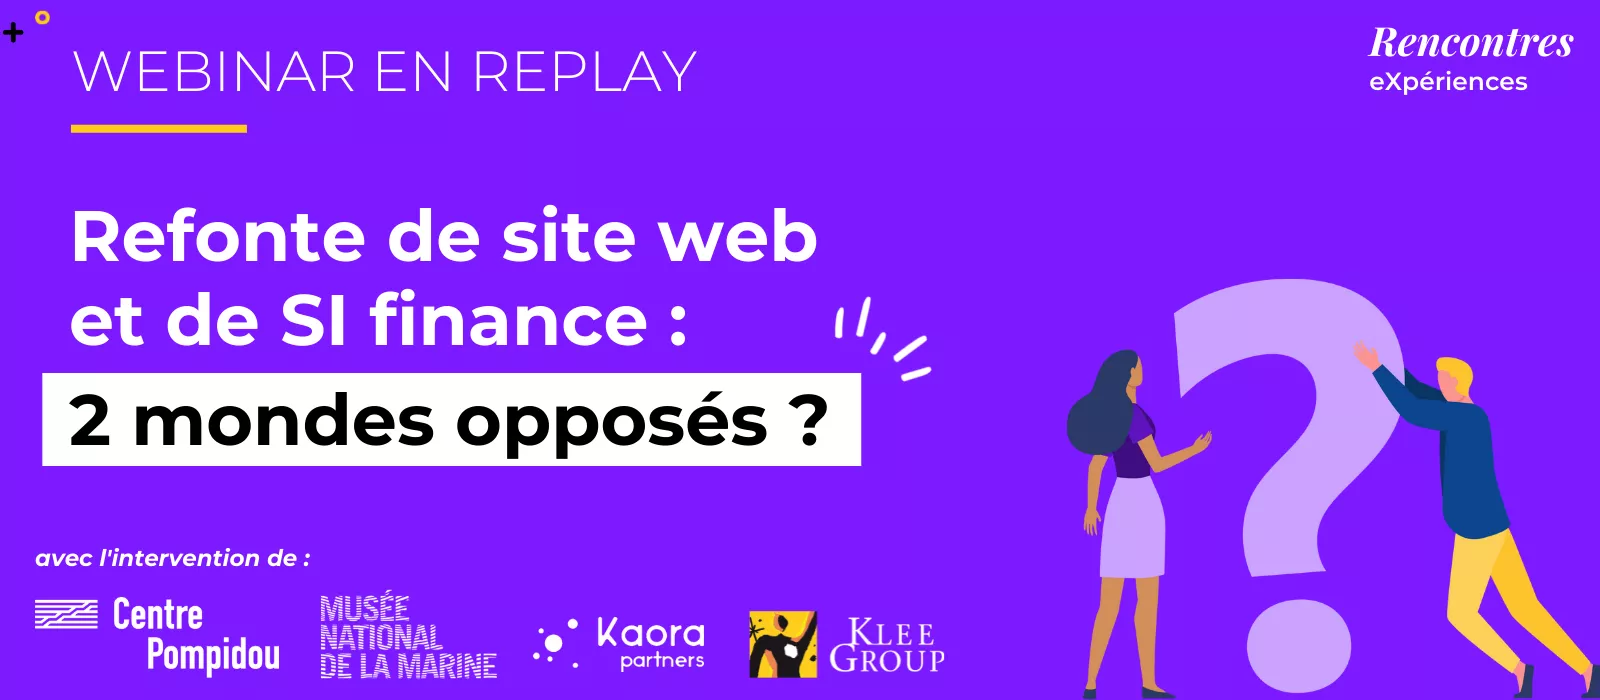 Refonte-Site-Web-SI-Finance-Webinar-Replay